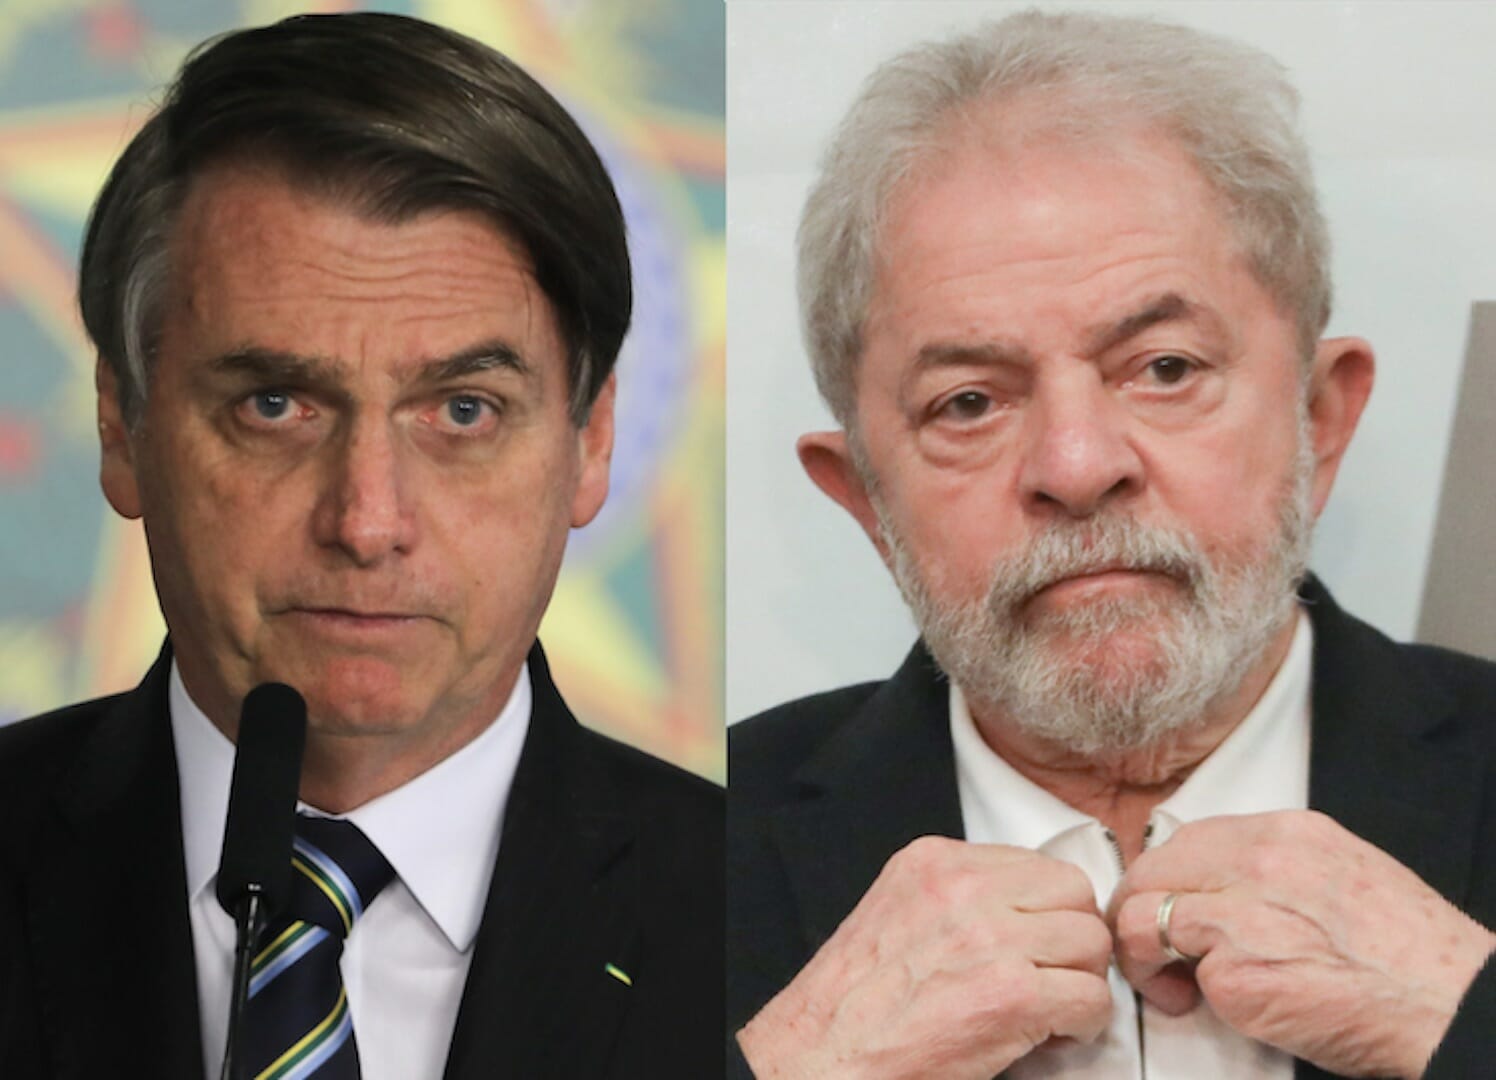 Jair Bolsonaro e Luiz Inácio Lula da Silva